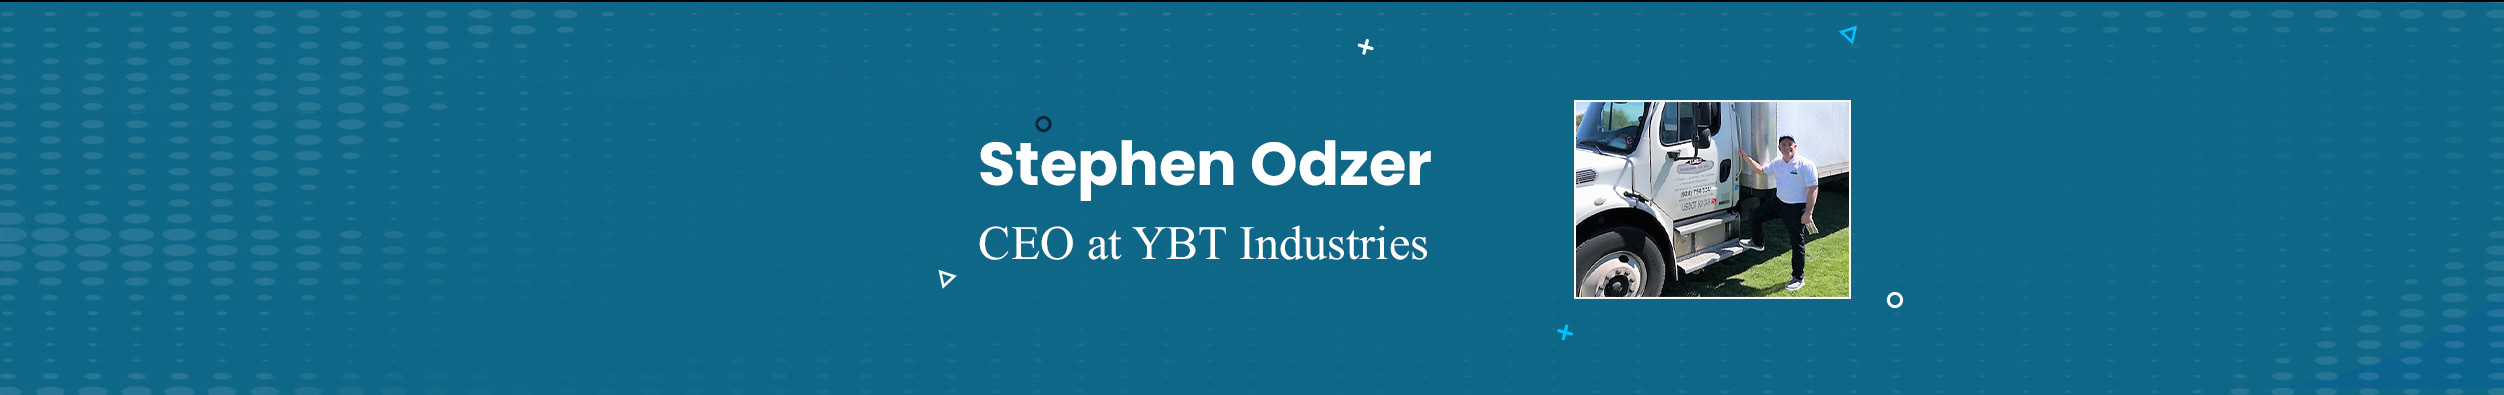 Stephen Odzer's profile banner